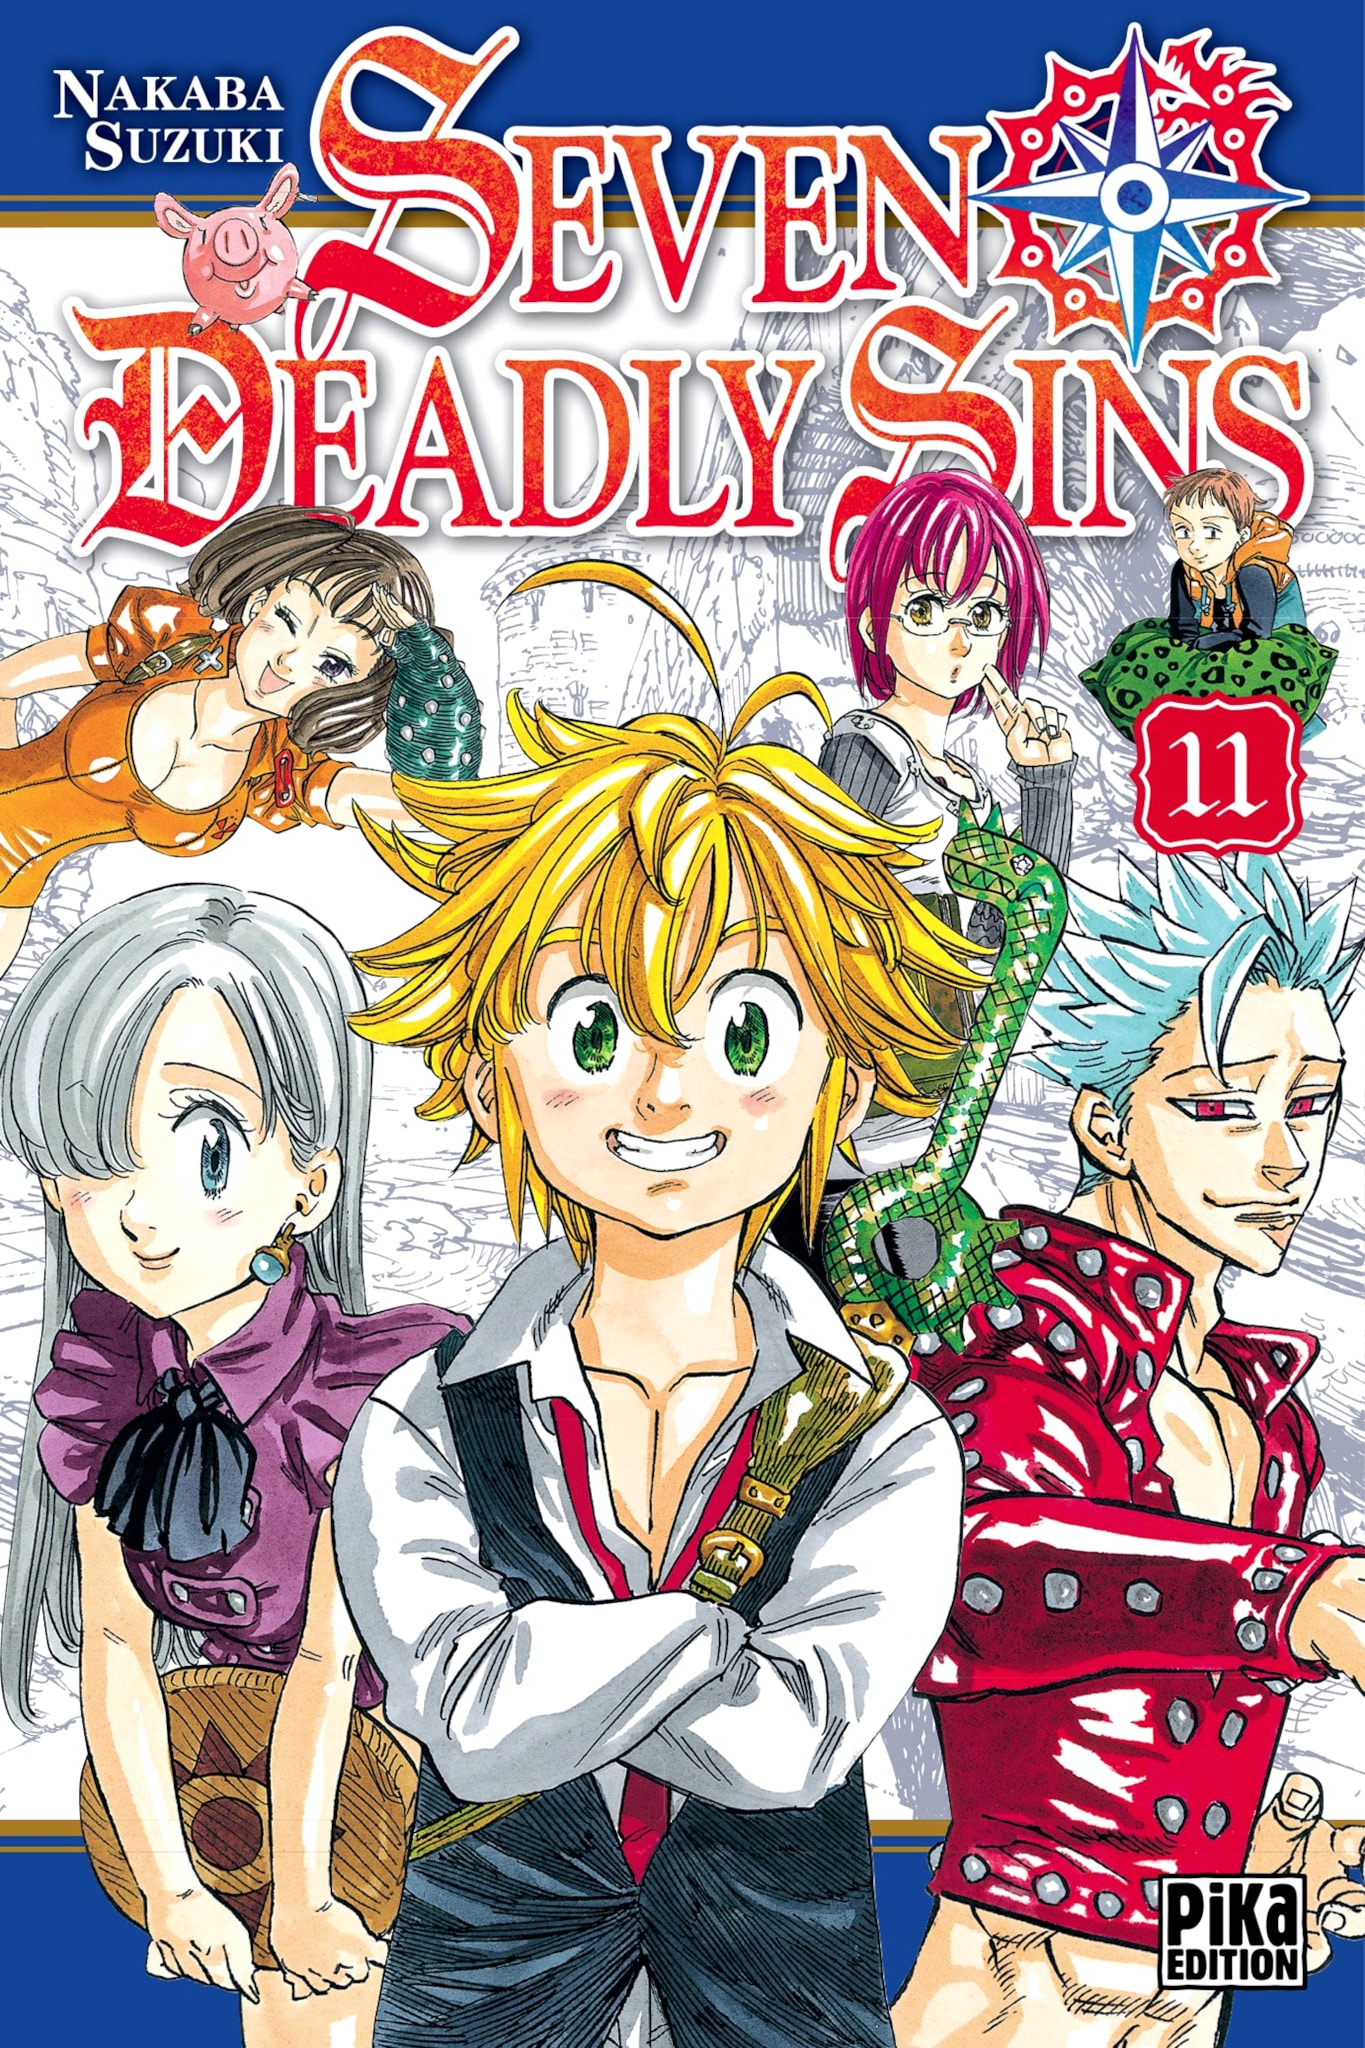 Tome 11 du manga The Seven Deadly Sins